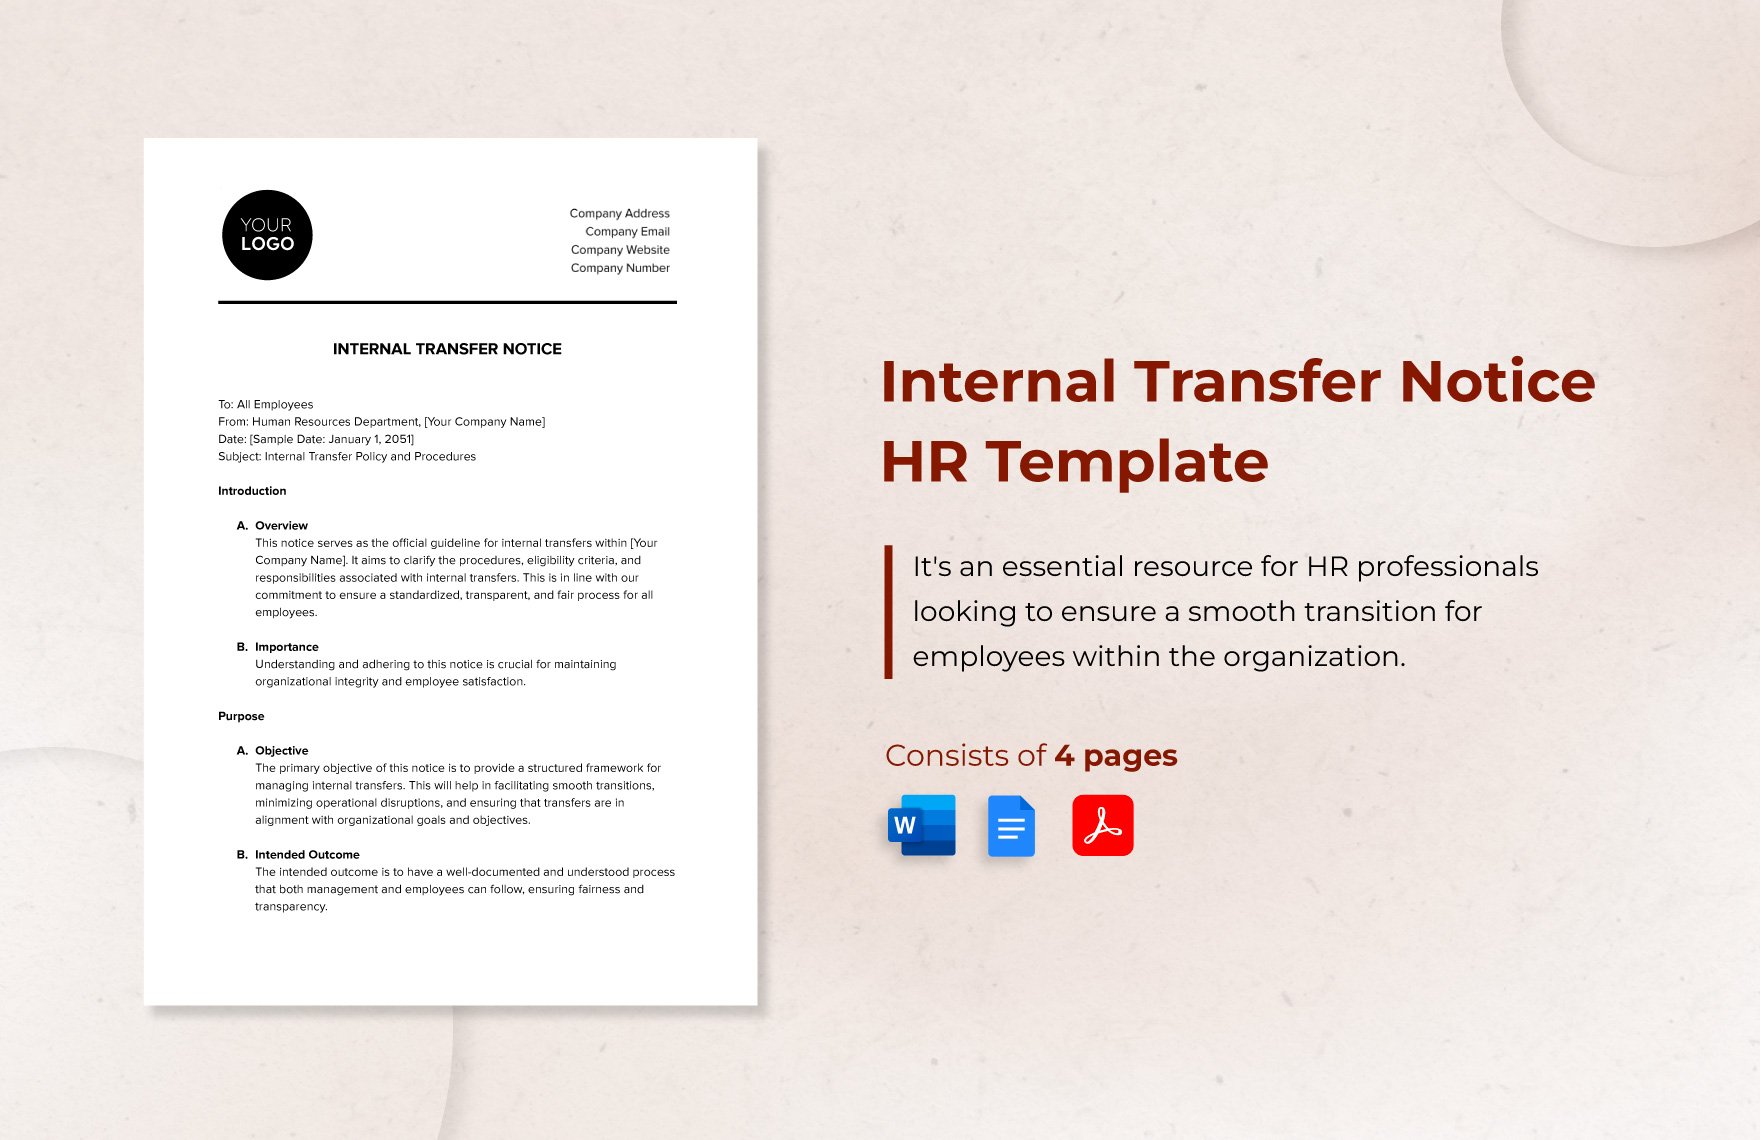 Internal Transfer Notice HR Template